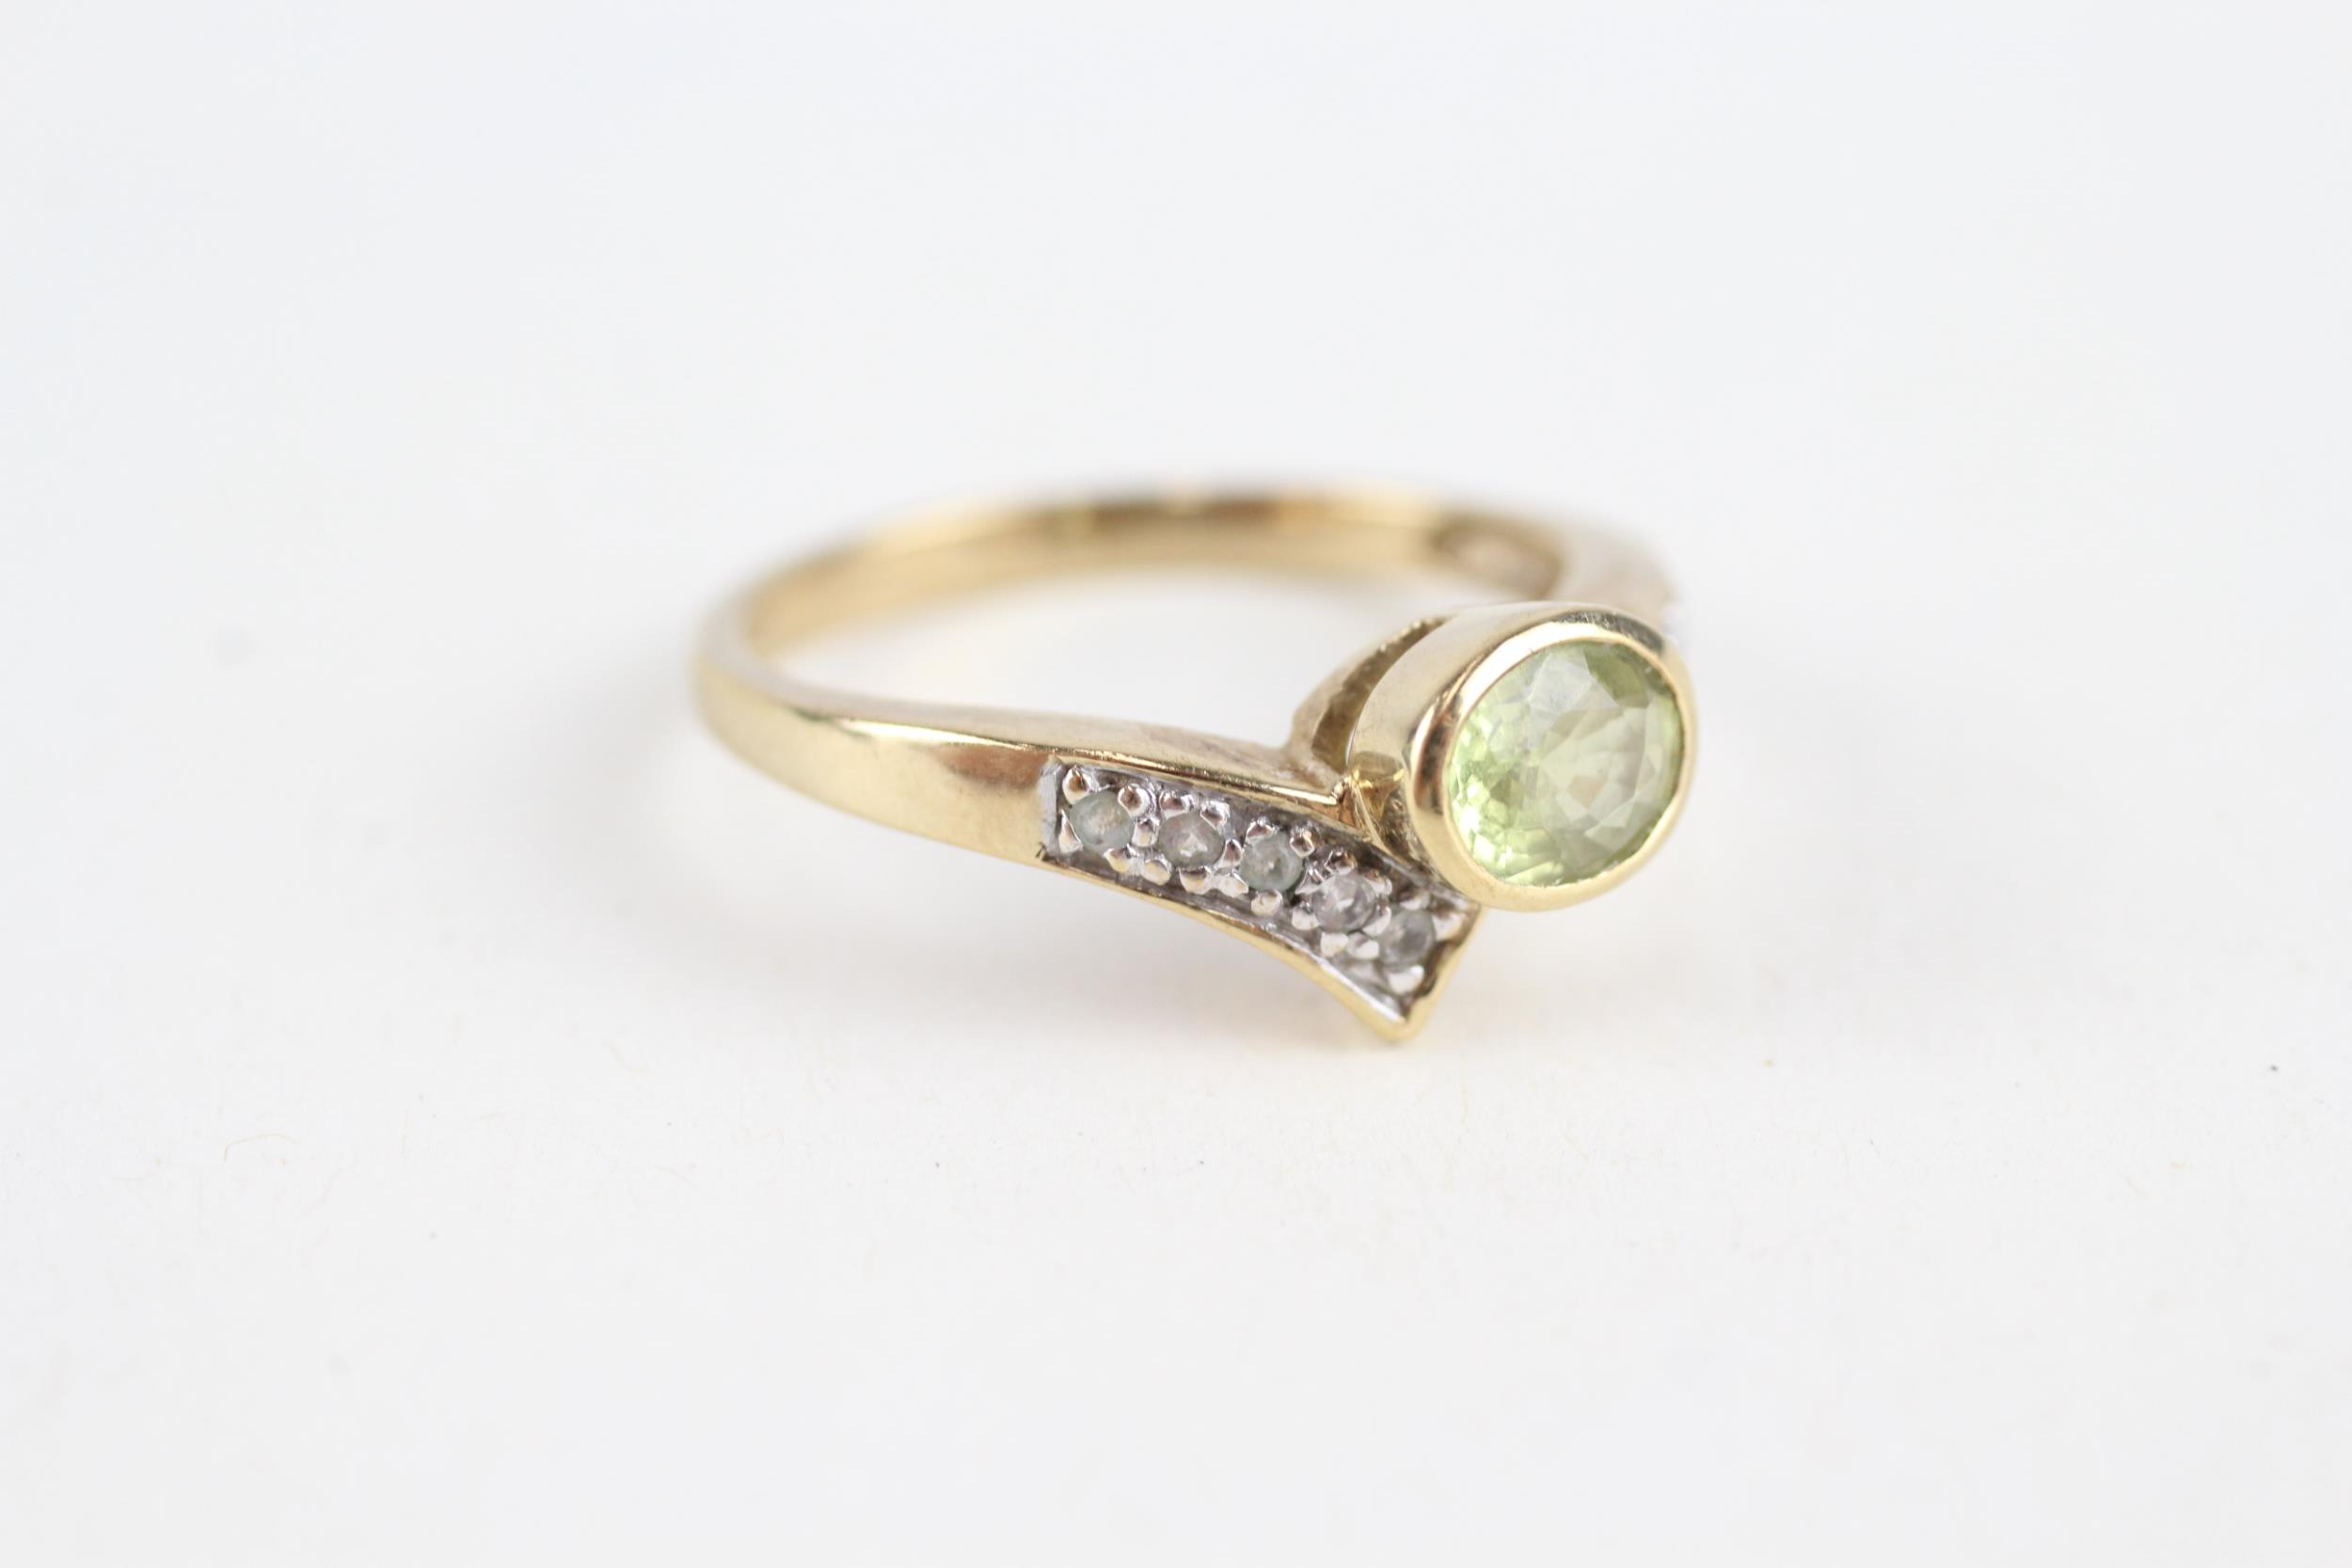 9ct gold green & white gemstone dress ring Size N 1/2 - 2.8 g - Image 2 of 4